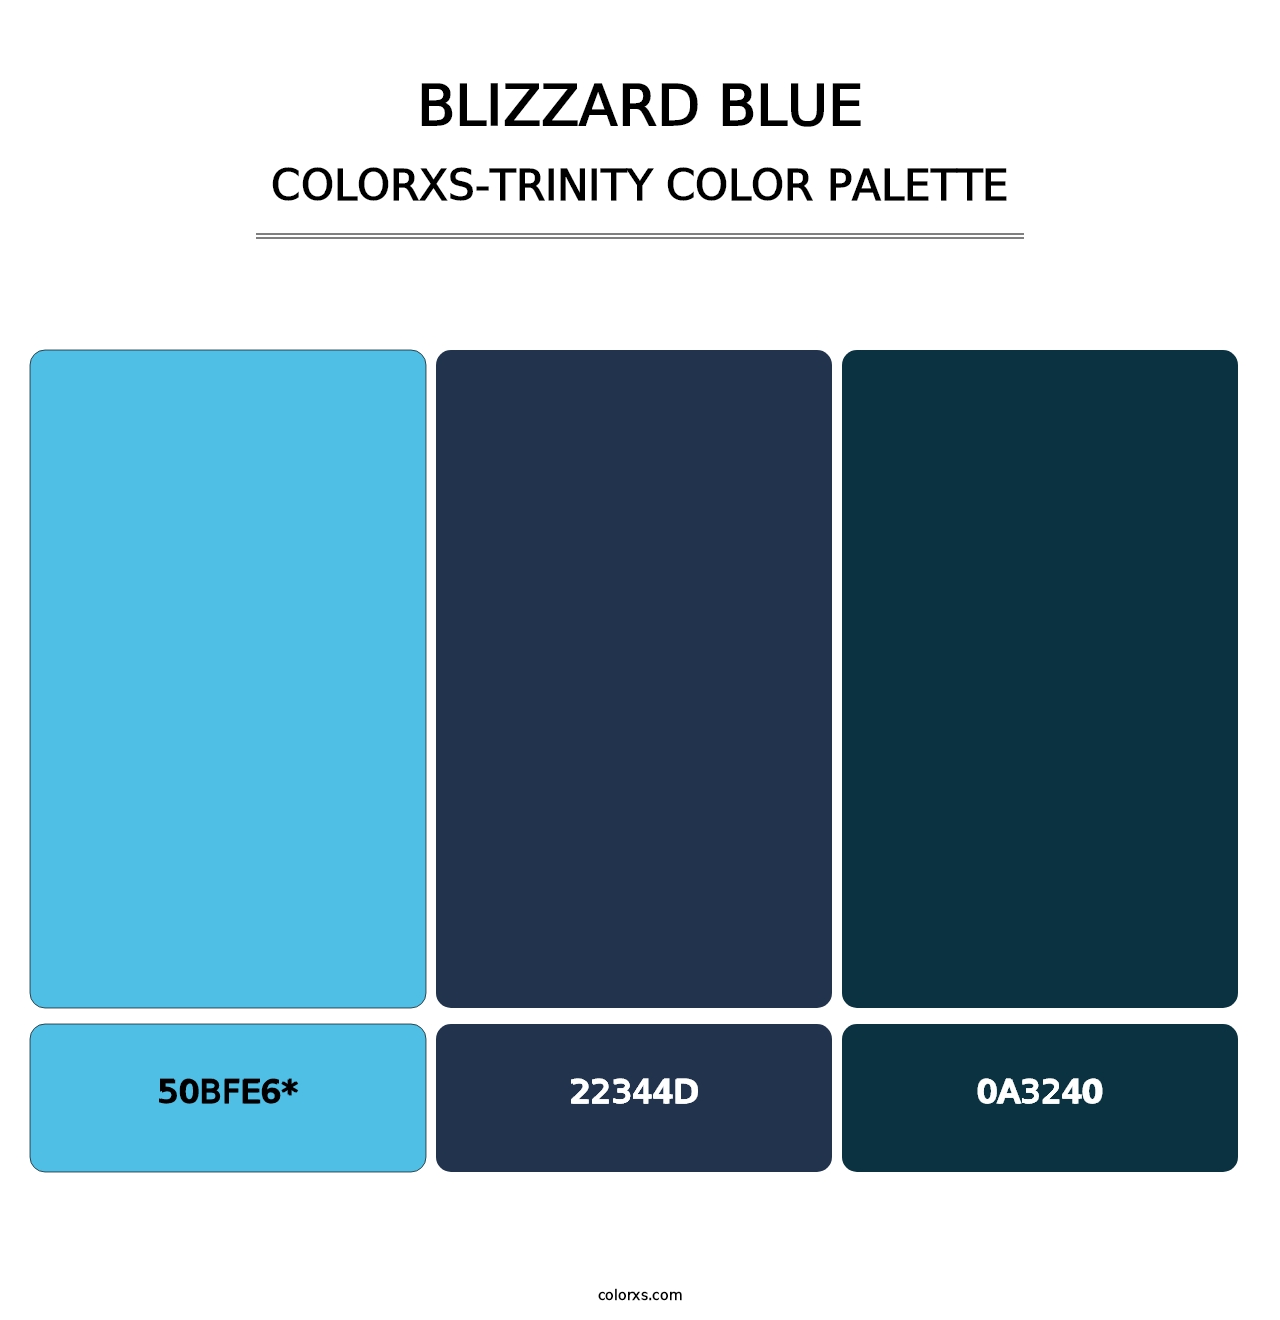 Blizzard Blue - Colorxs Trinity Palette